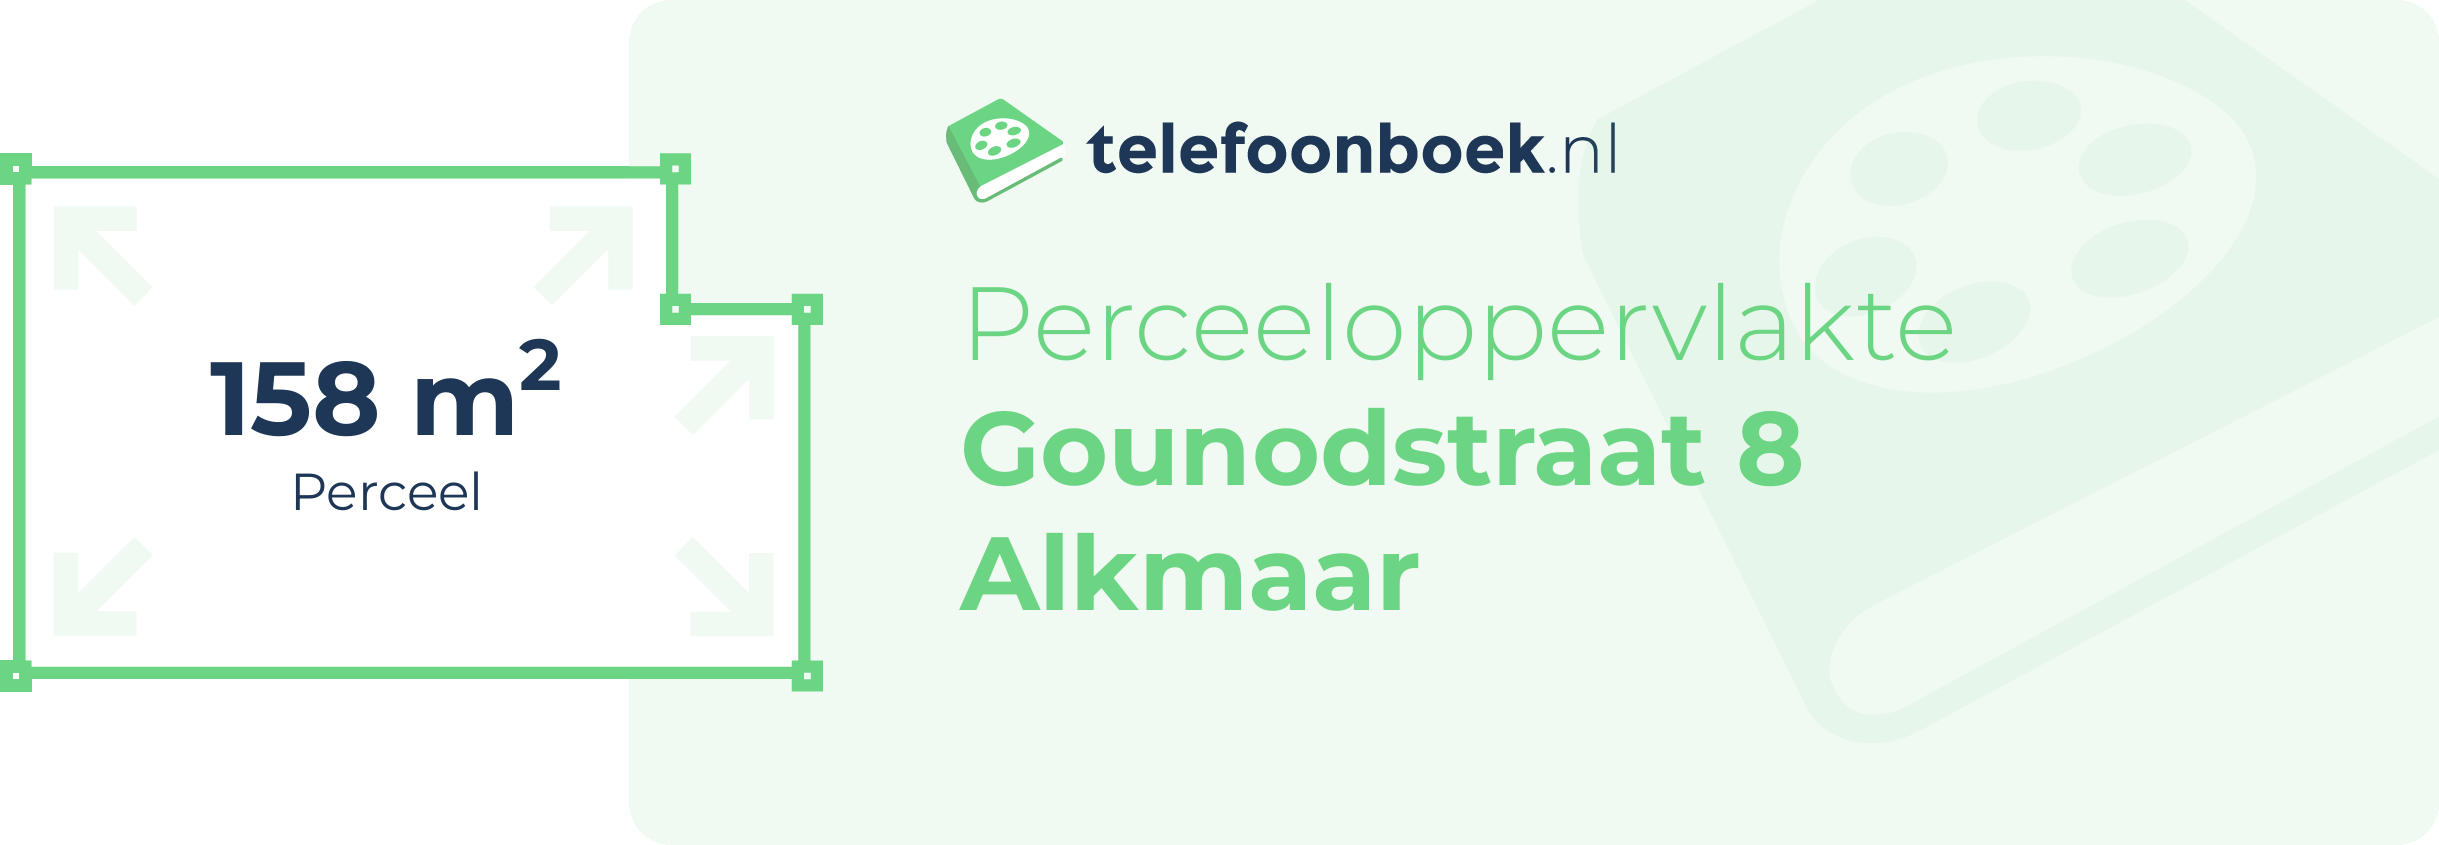 Perceeloppervlakte Gounodstraat 8 Alkmaar